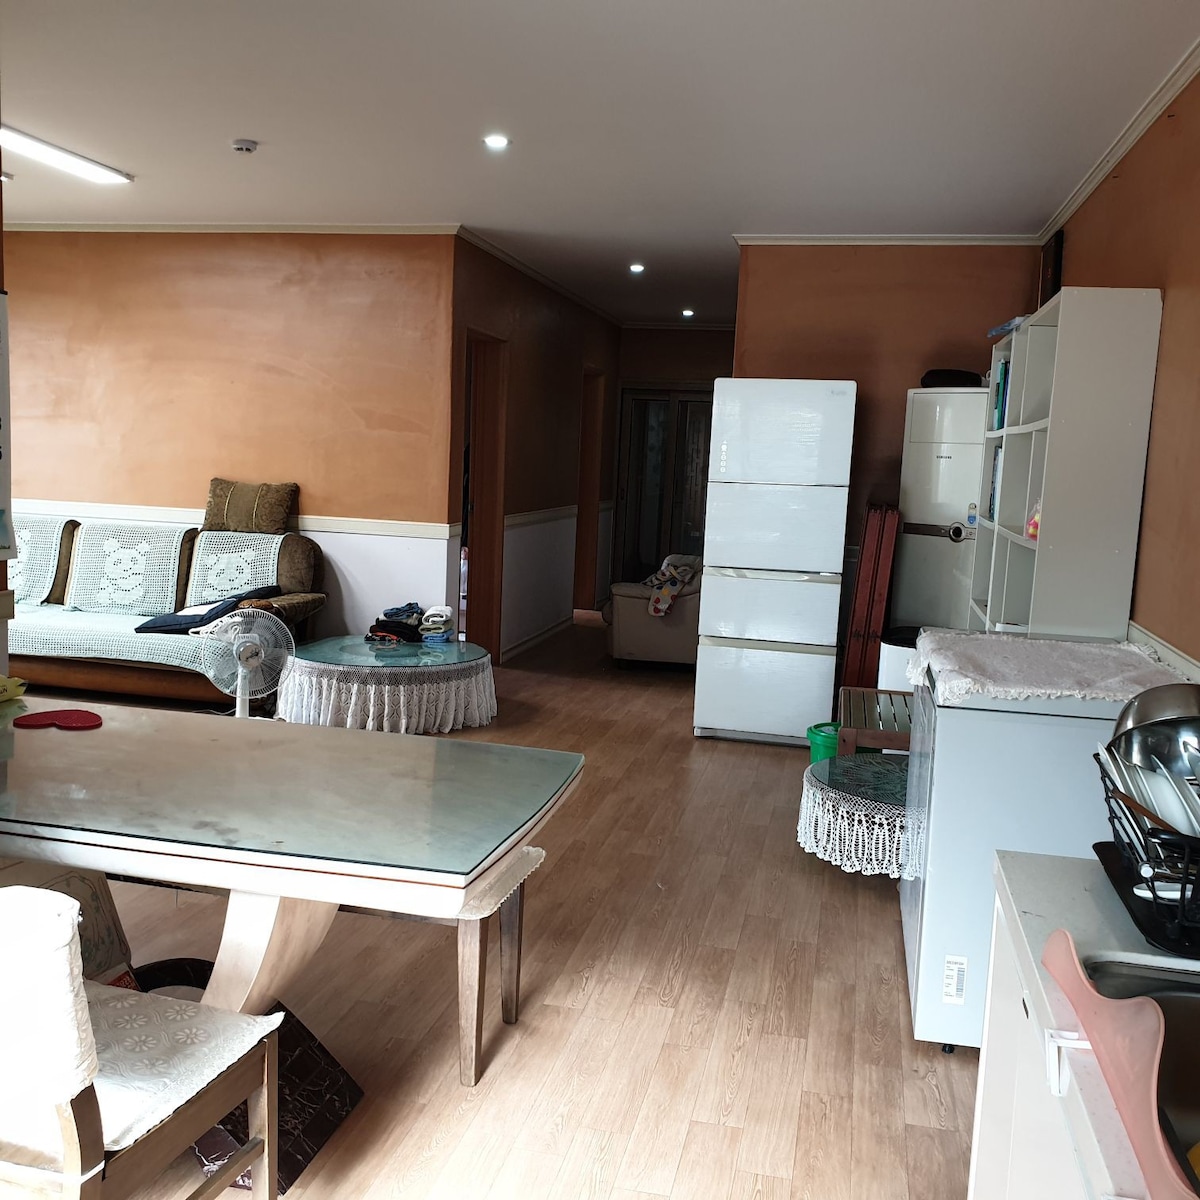 Cheonghak Igol住宿和早餐。公寓式室内结构小屋仅限使用30平见。仅限夏季的儿童游泳池